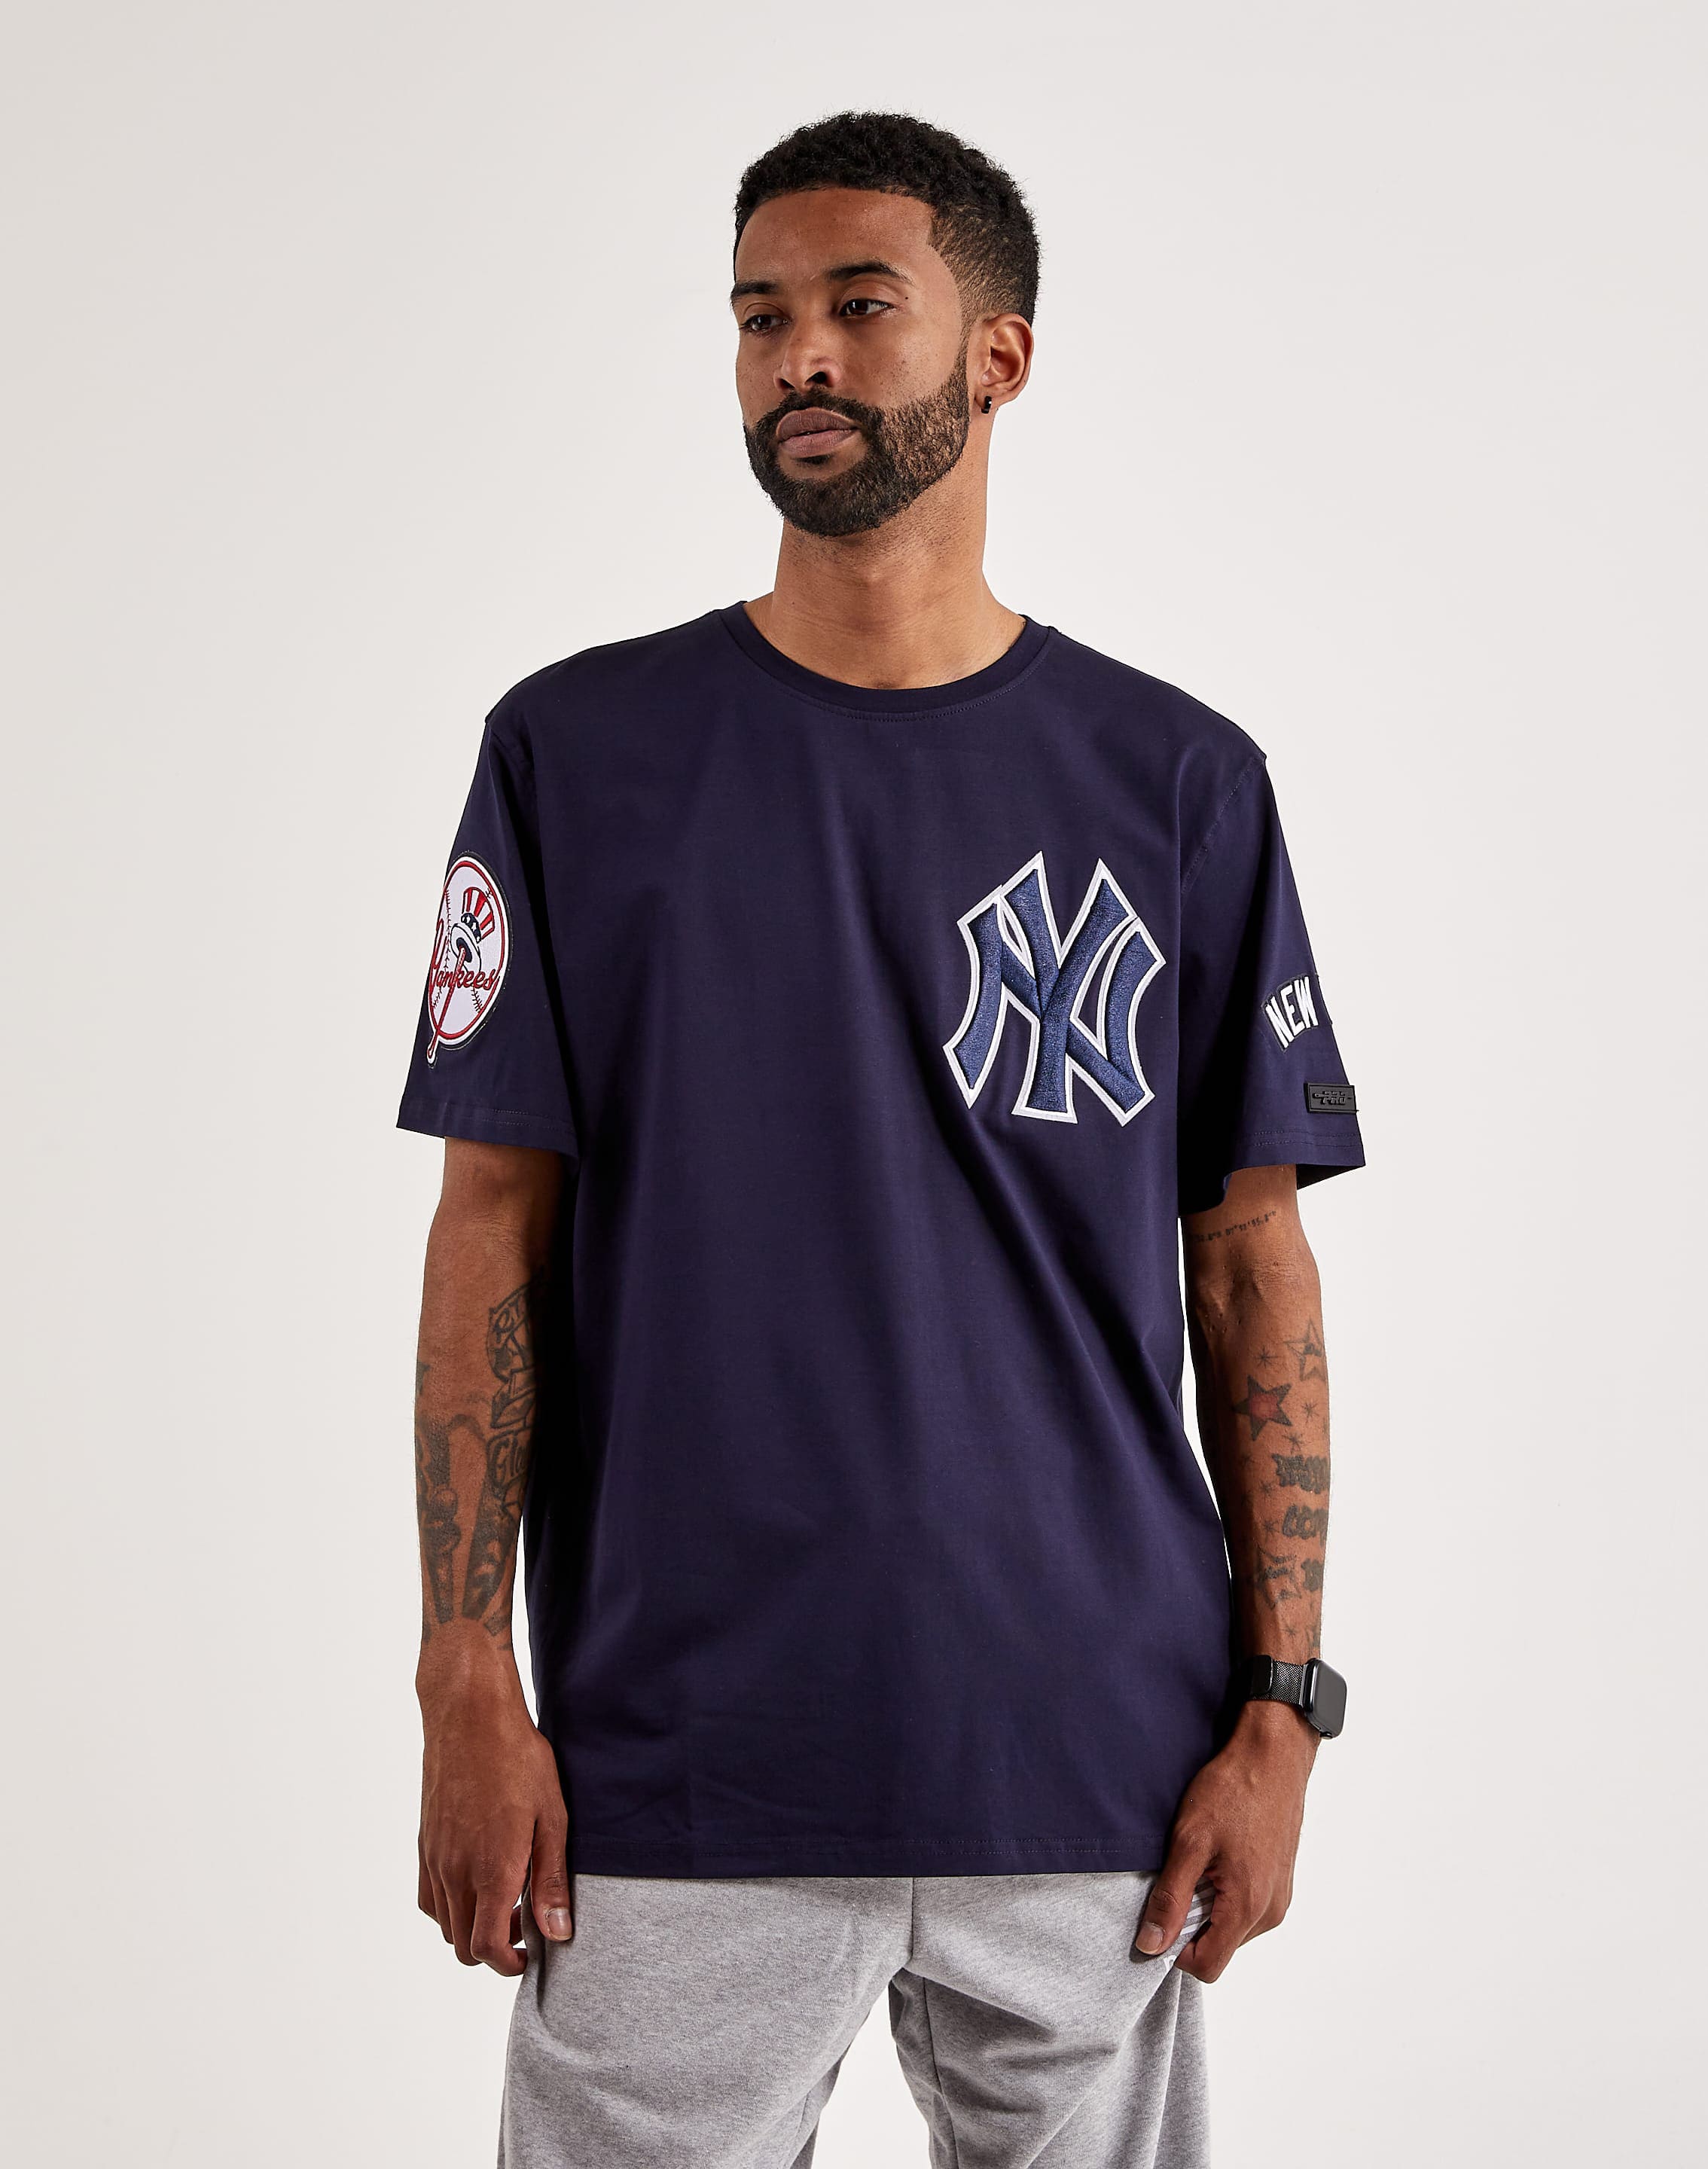 New York Yankees Shirts for Women